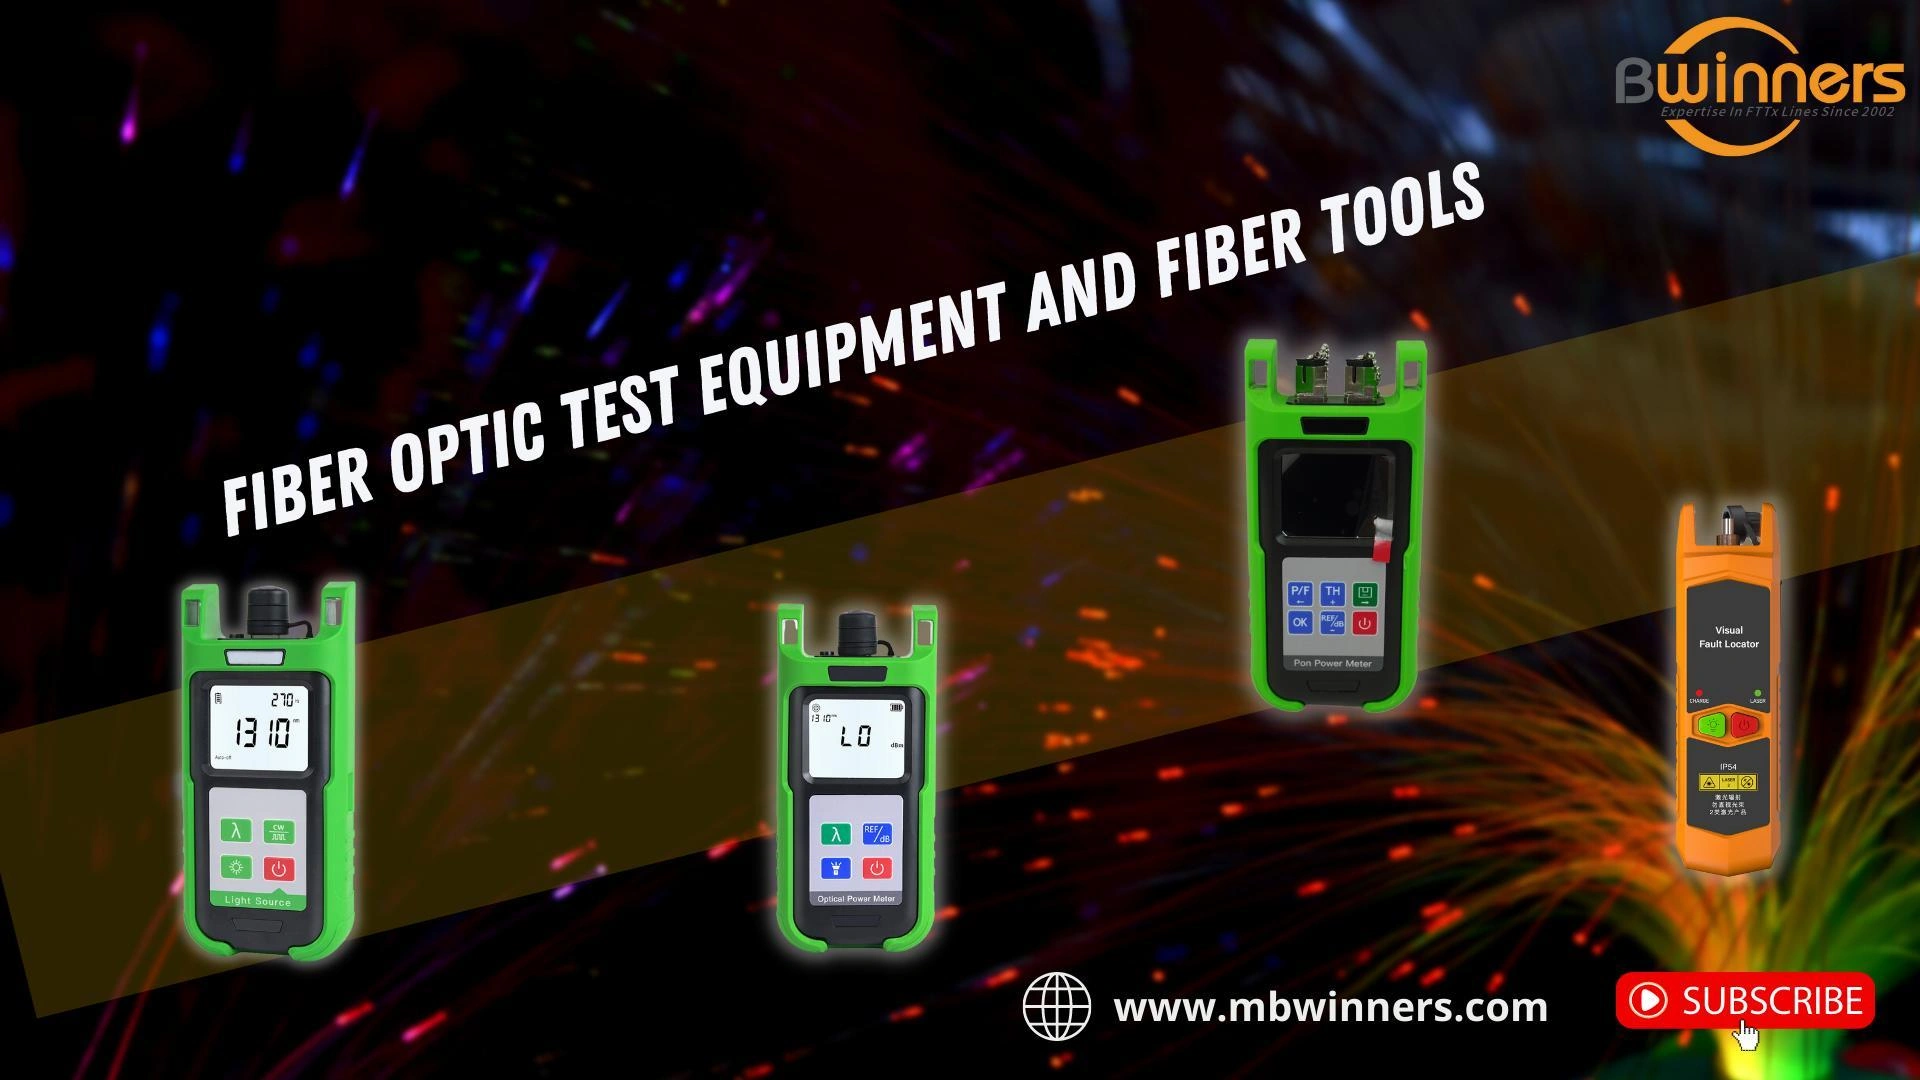 BWN-OTDR-LC2 Fiber Optic Launch Reel, Fiber Optic Test Equipment And Fiber  Tools